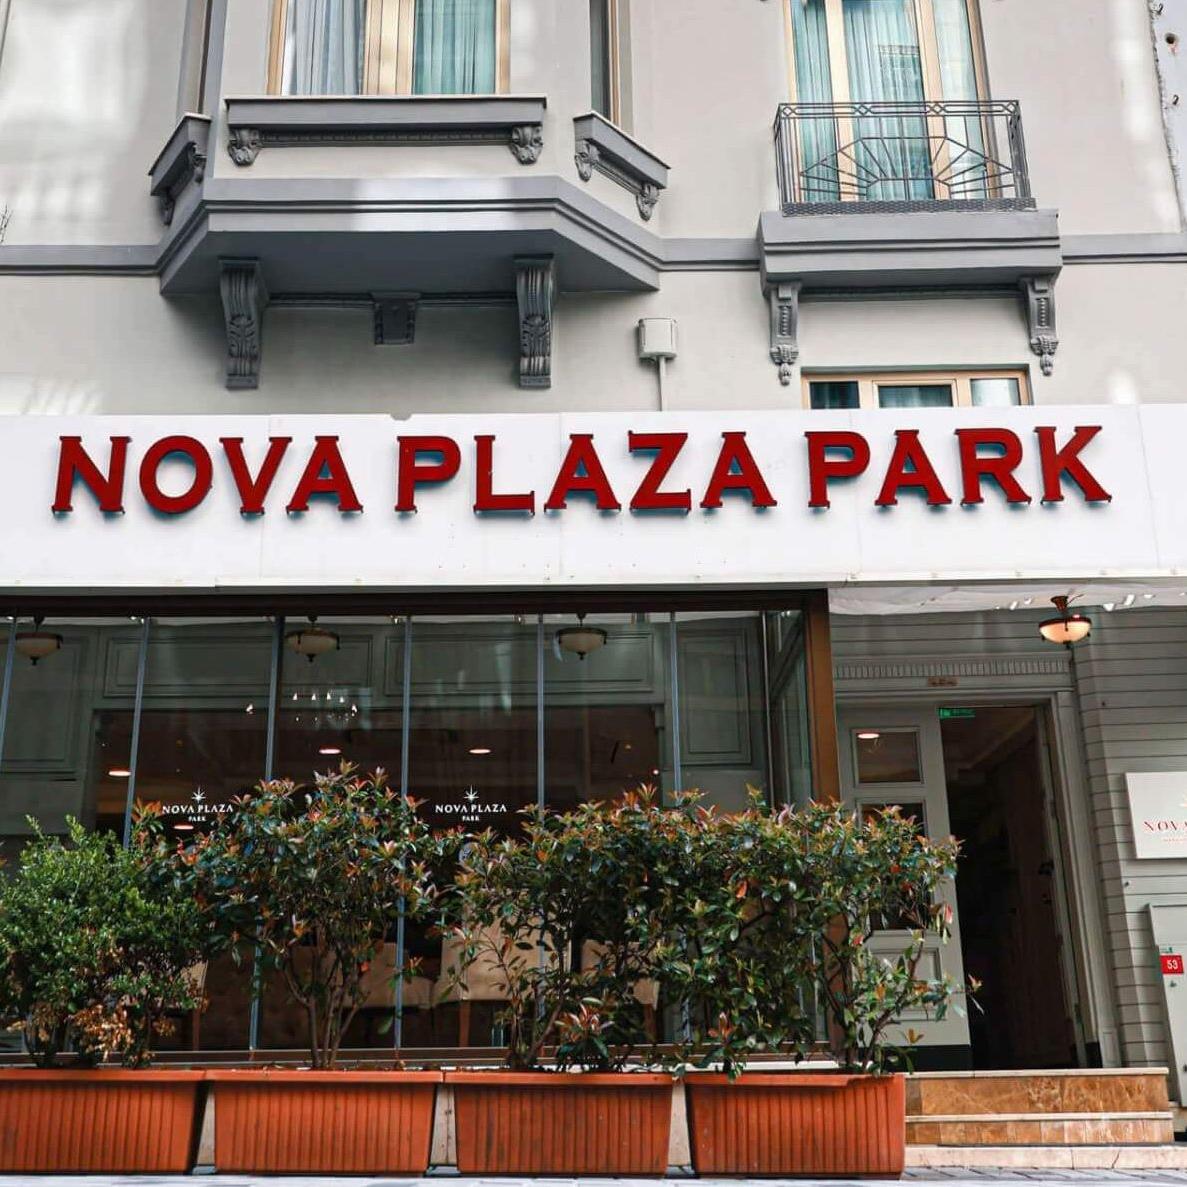 Nova Plaza Park Hotel mena plaza hotel al barsha